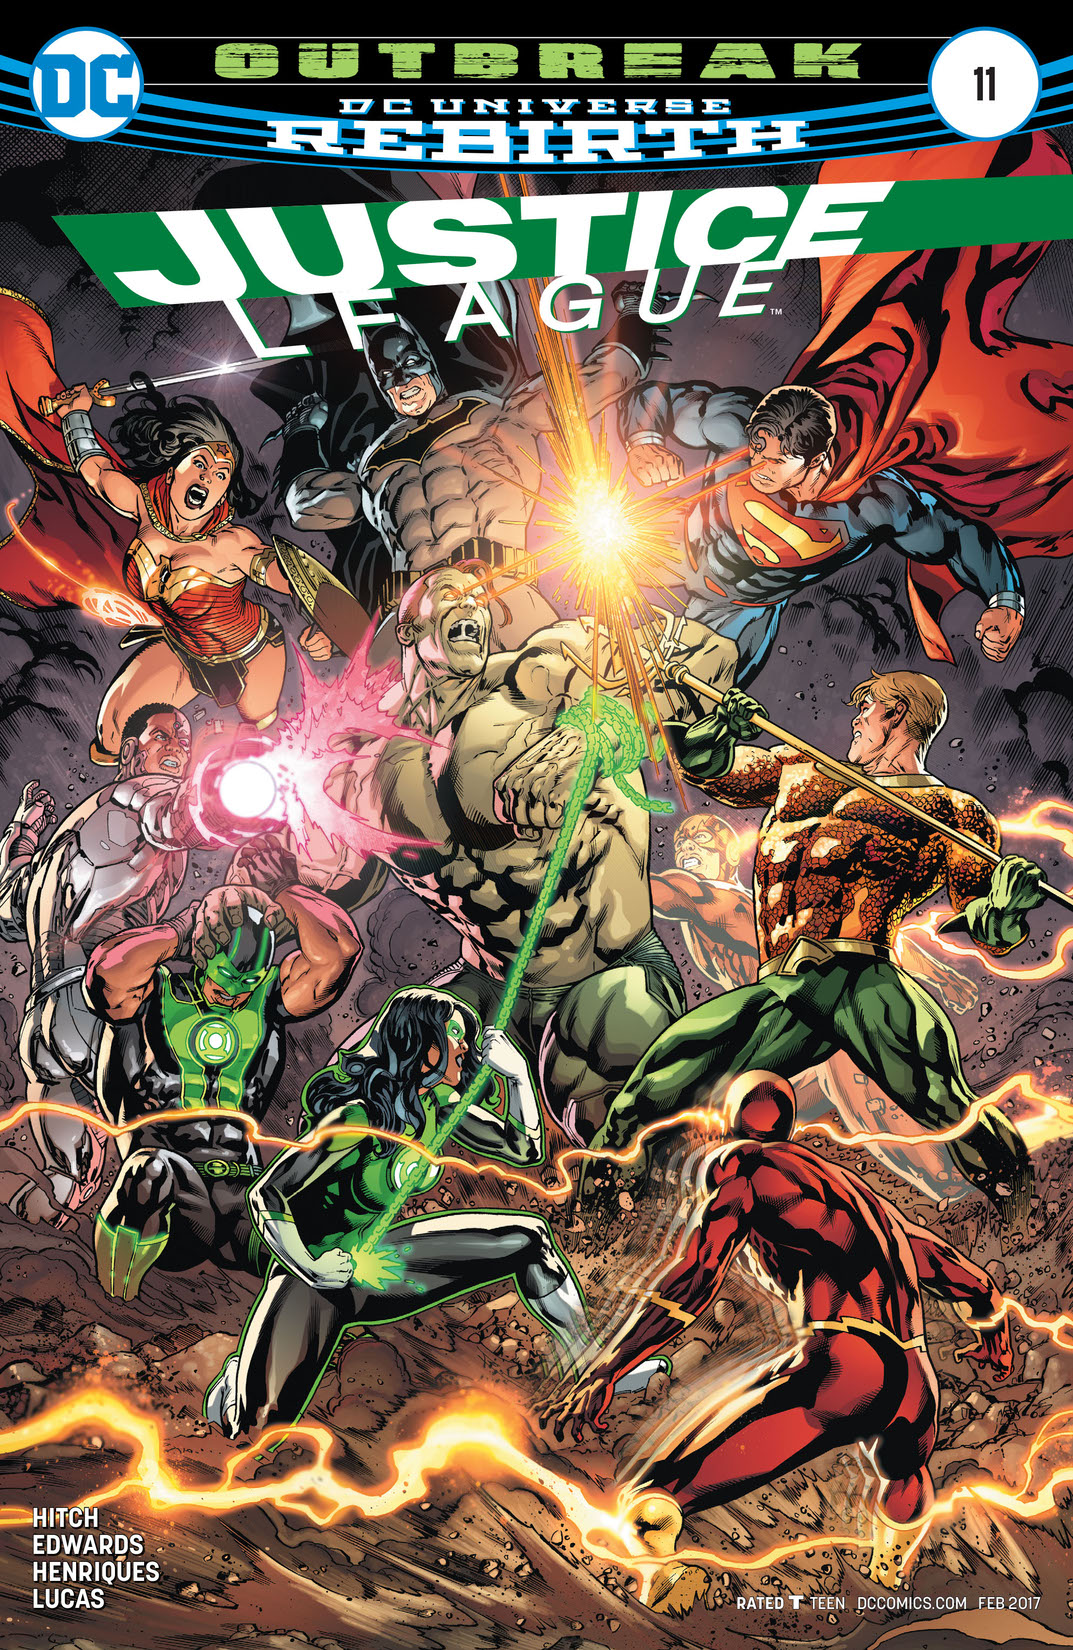 Justice League (2016-) #11 preview images